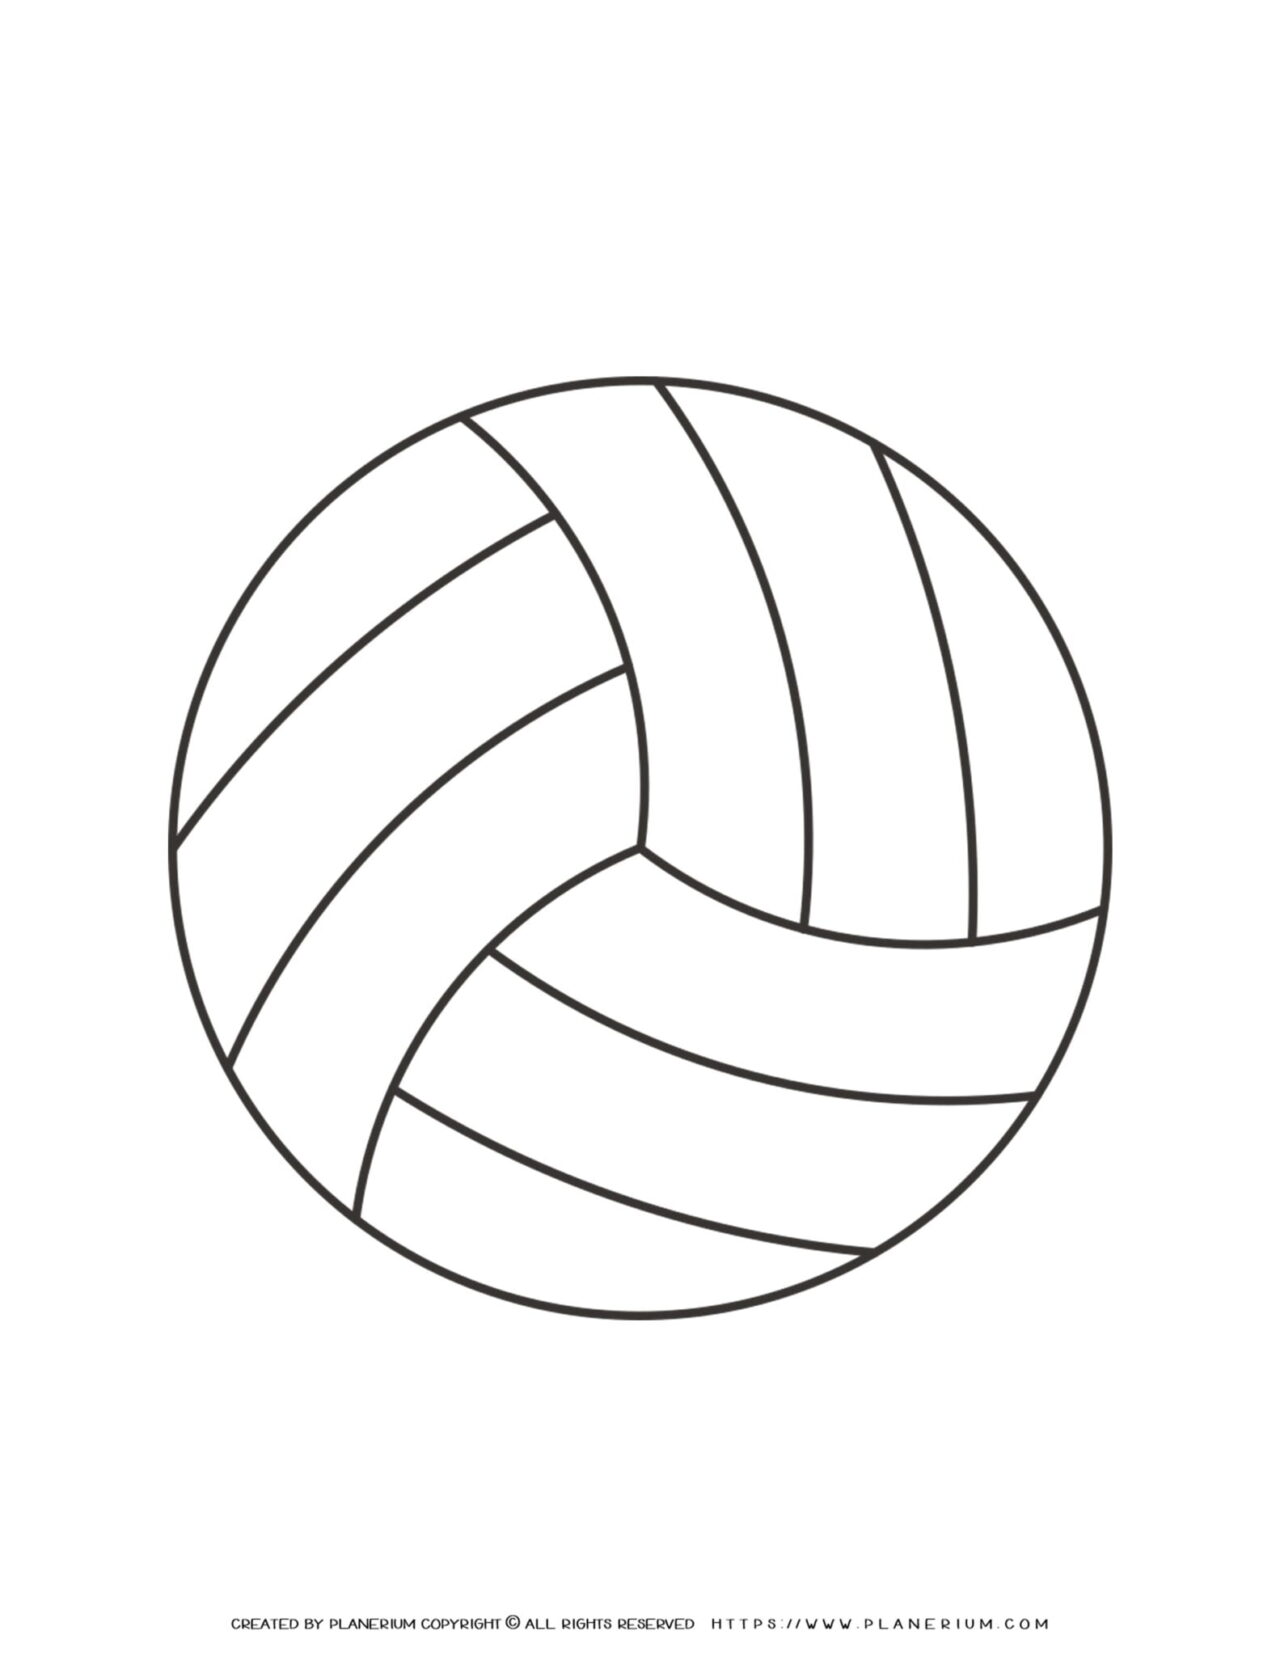 Sport Template - Volleyball | Planerium